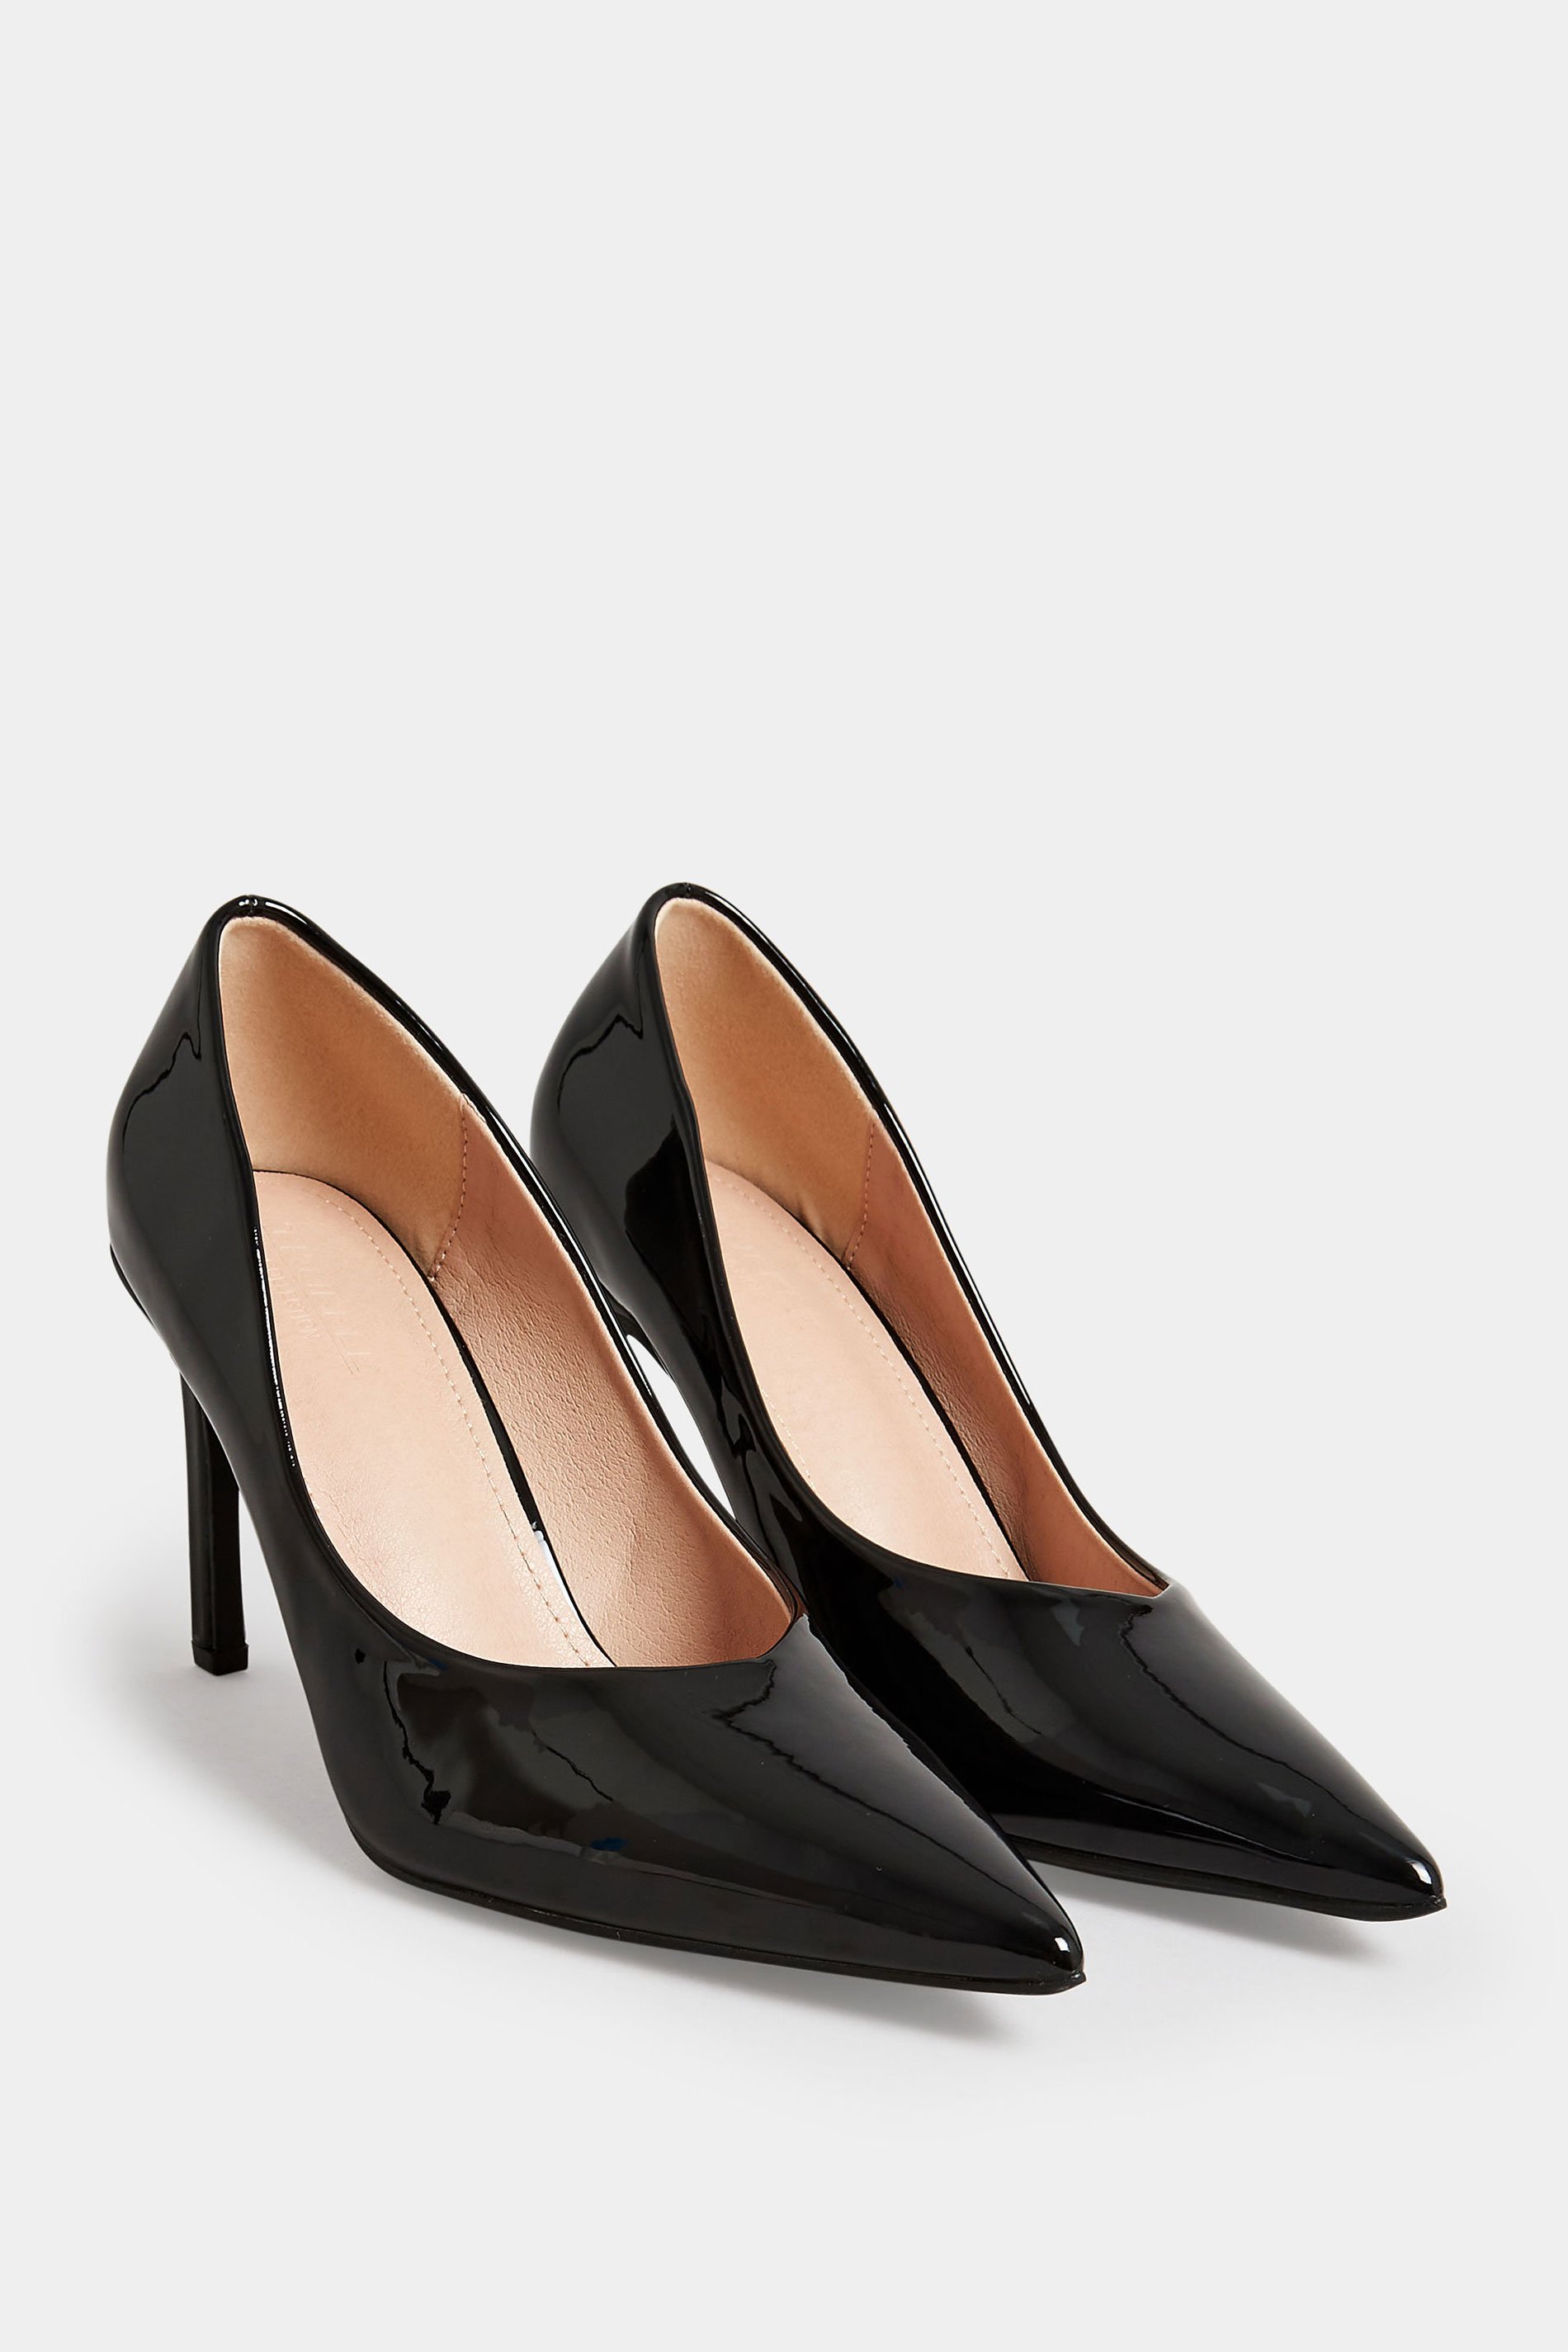 PixieGirl Black Patent Pointed Court Shoes In Standard Fit | PixieGirl 2